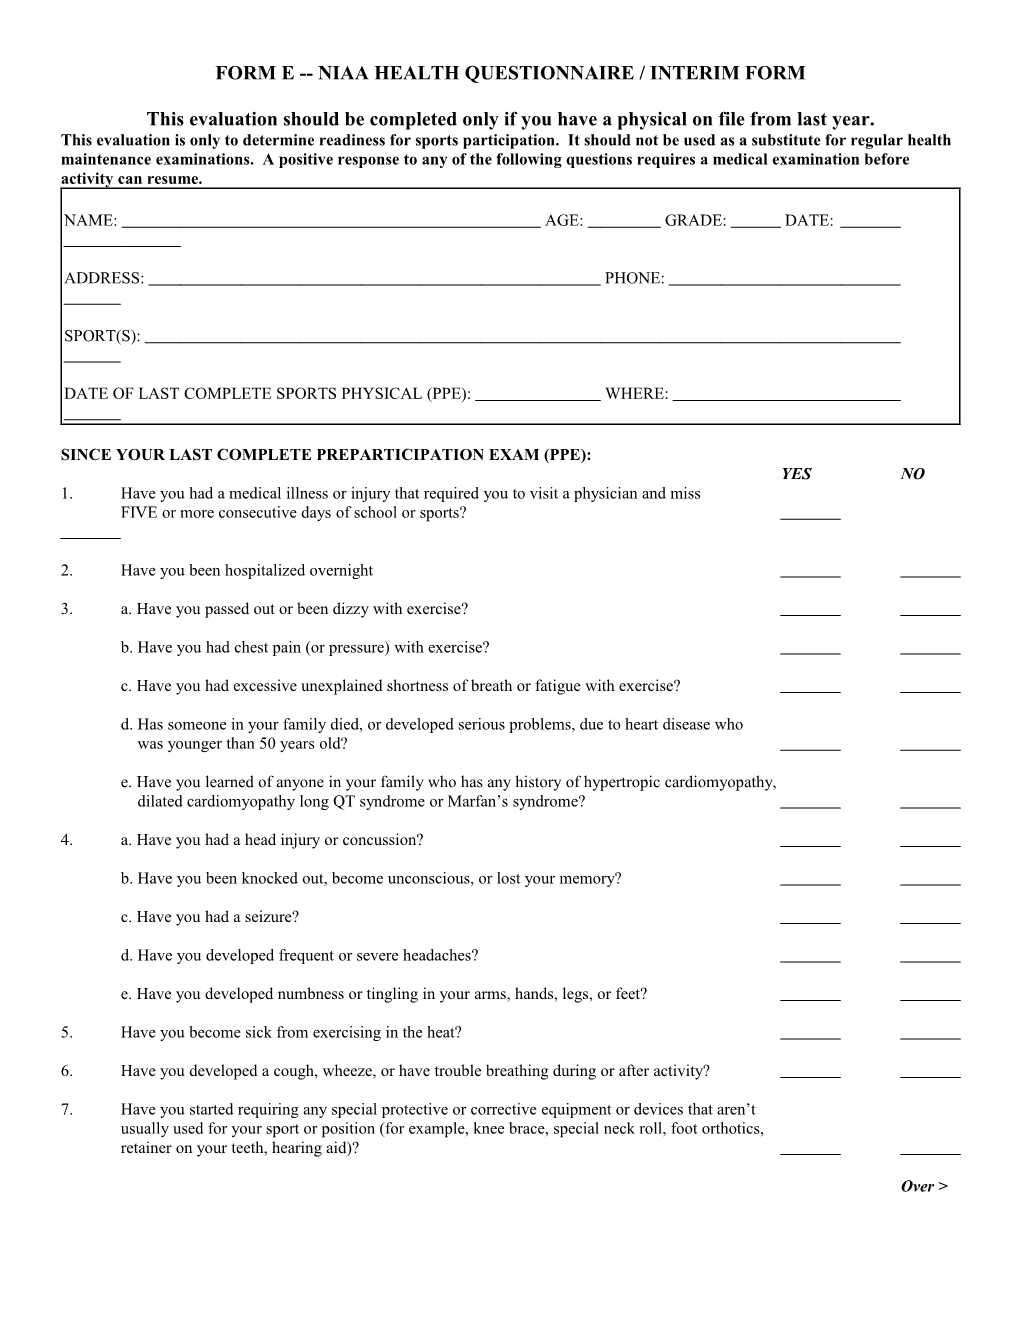 Form E Niaa Health Questionnaire / Interim Form